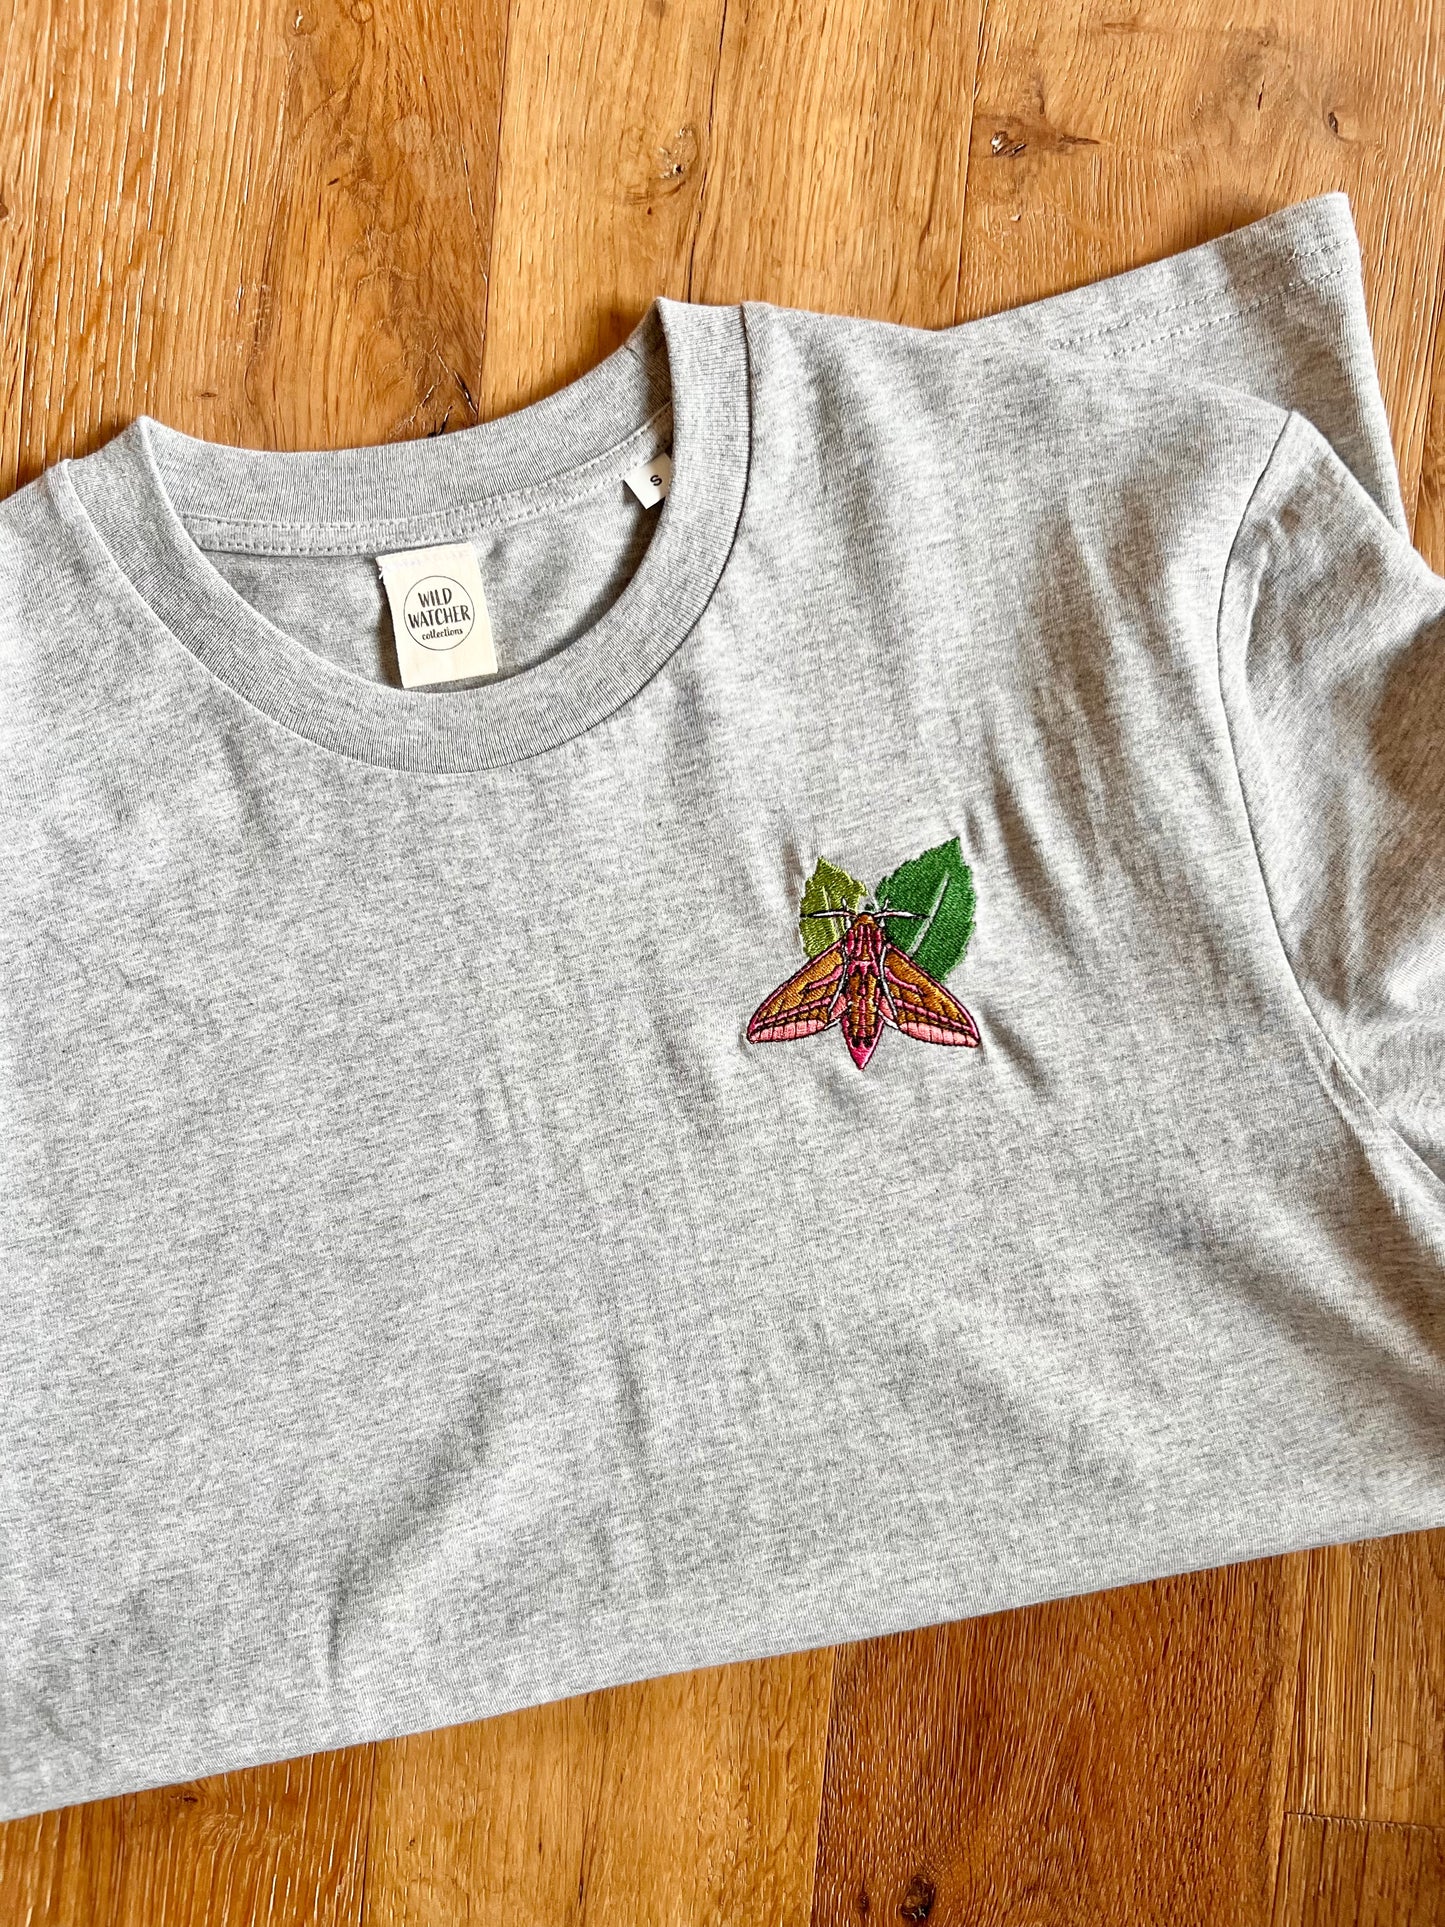 Elephant Hawk Moth Embroidered Tee